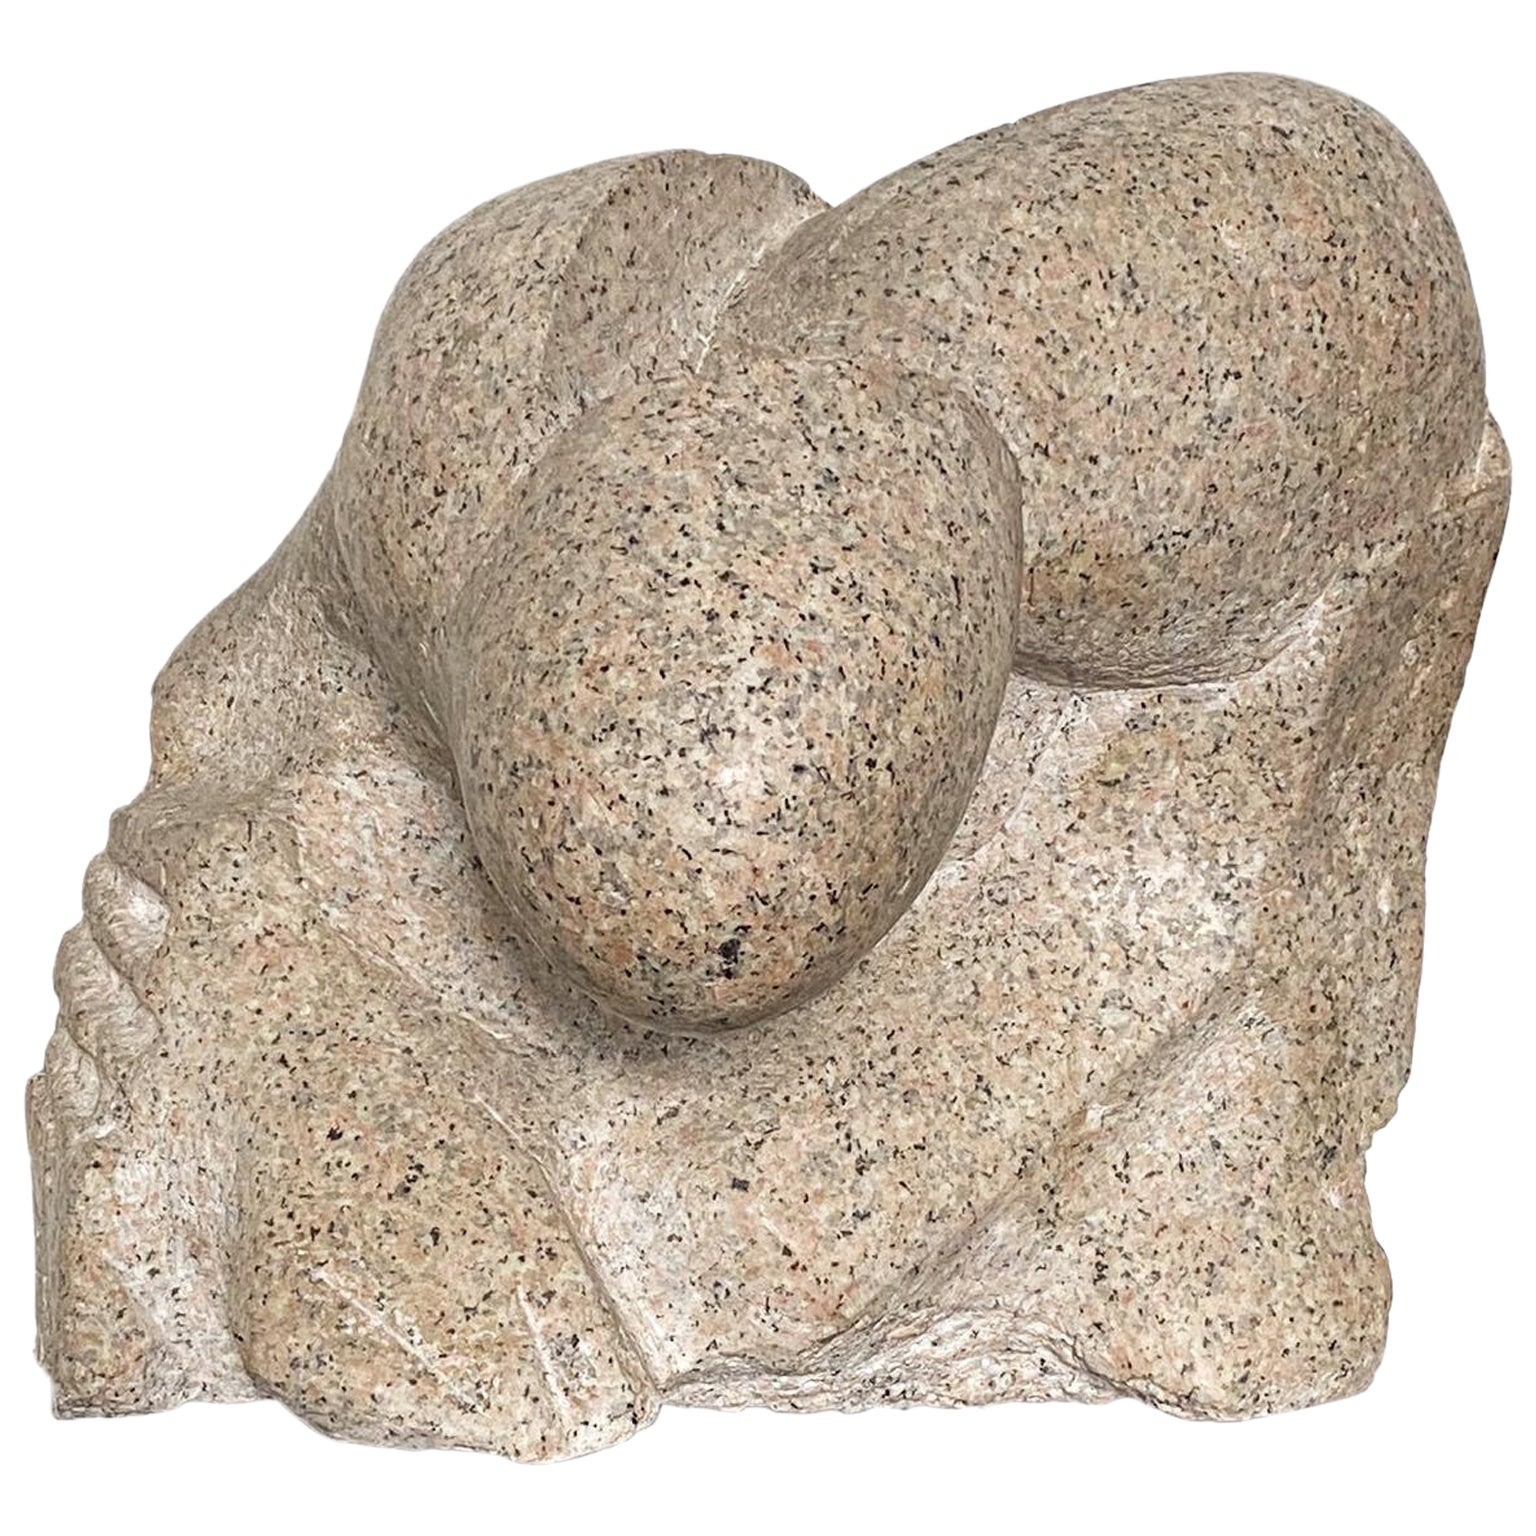 Rosa Granit-Skulptur von Aldo Flecchia